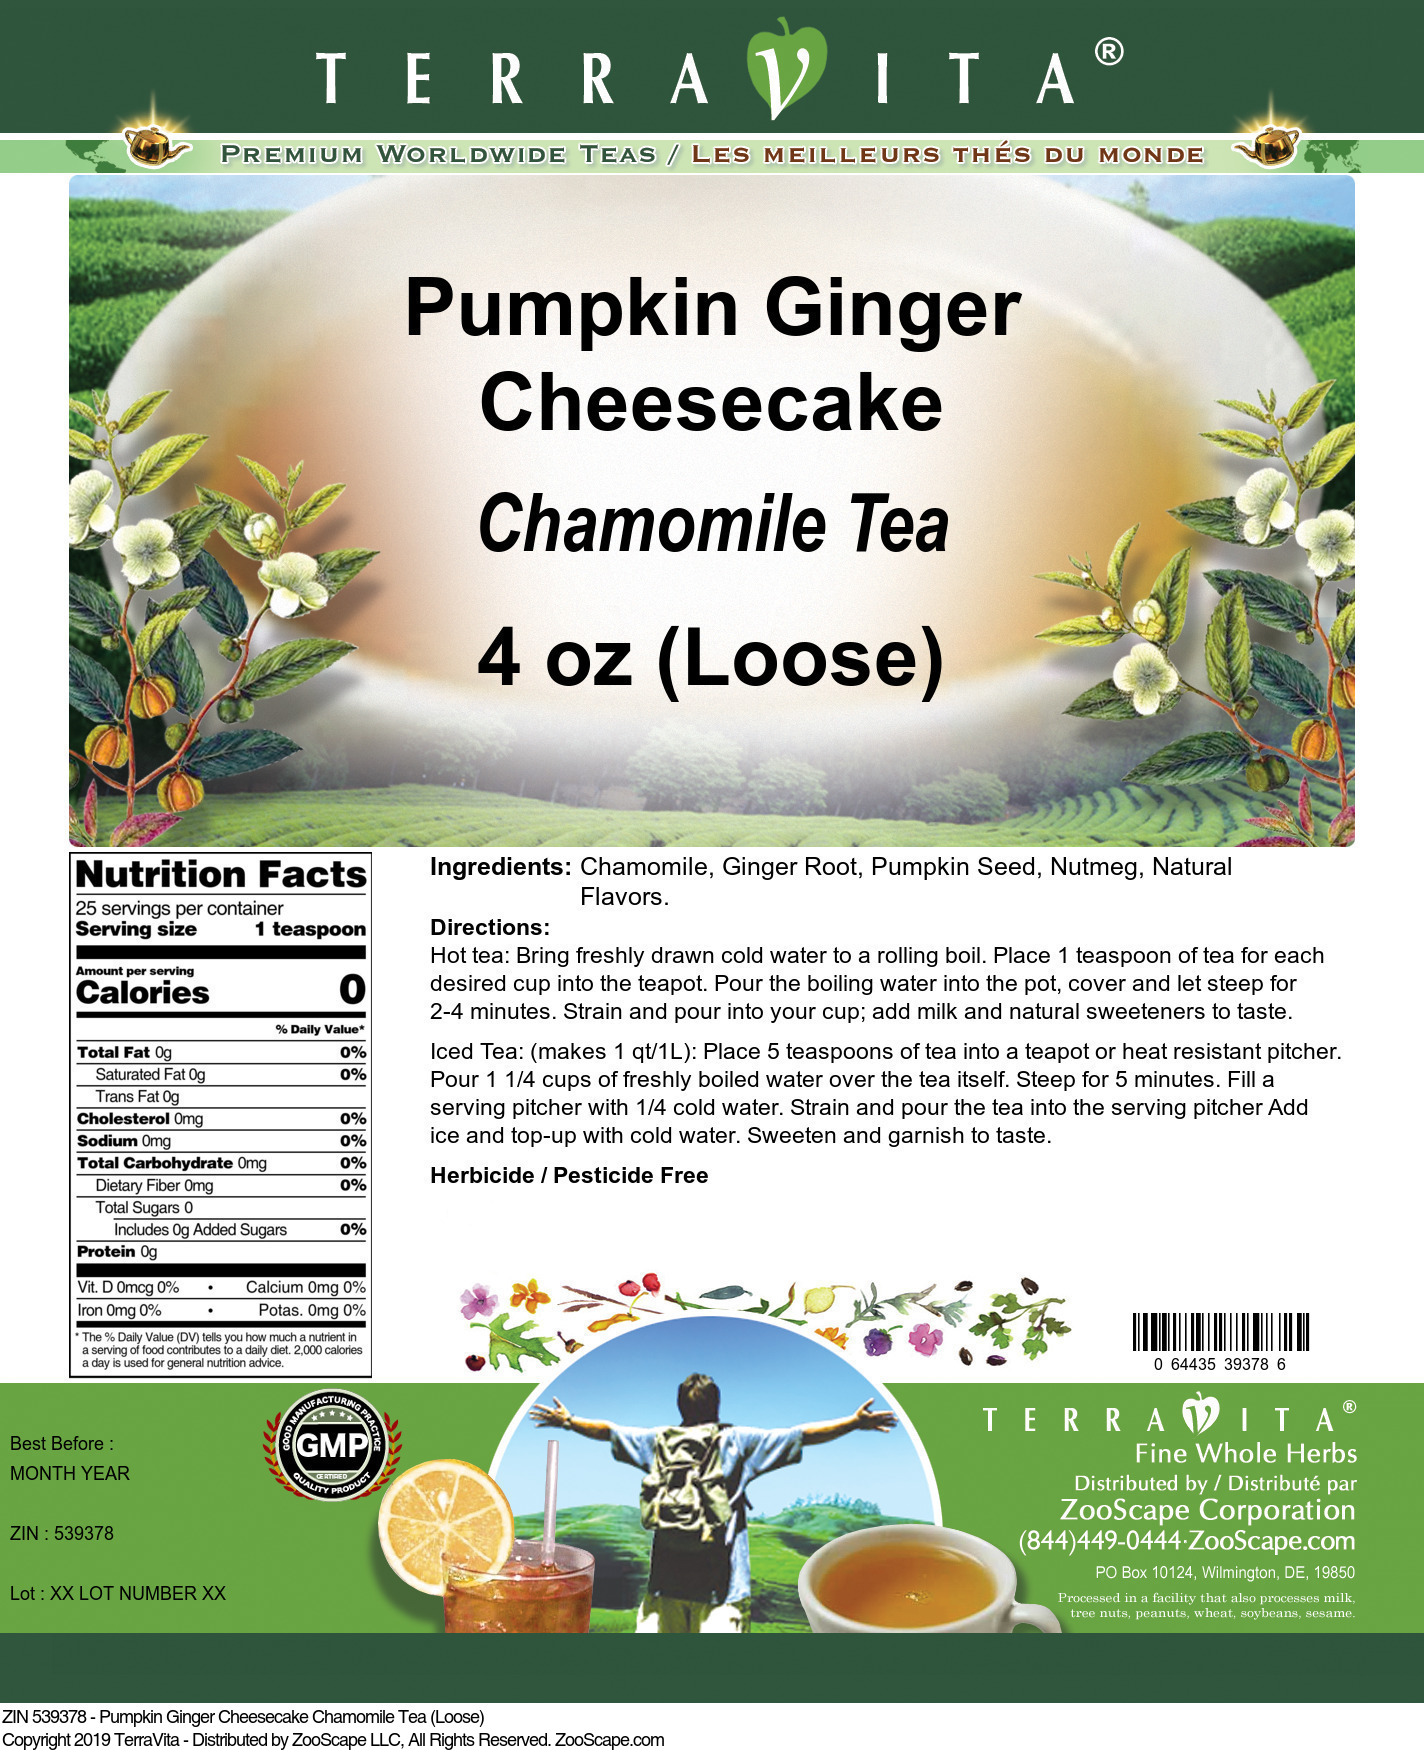 Pumpkin Ginger Cheesecake Chamomile Tea (Loose) - Label